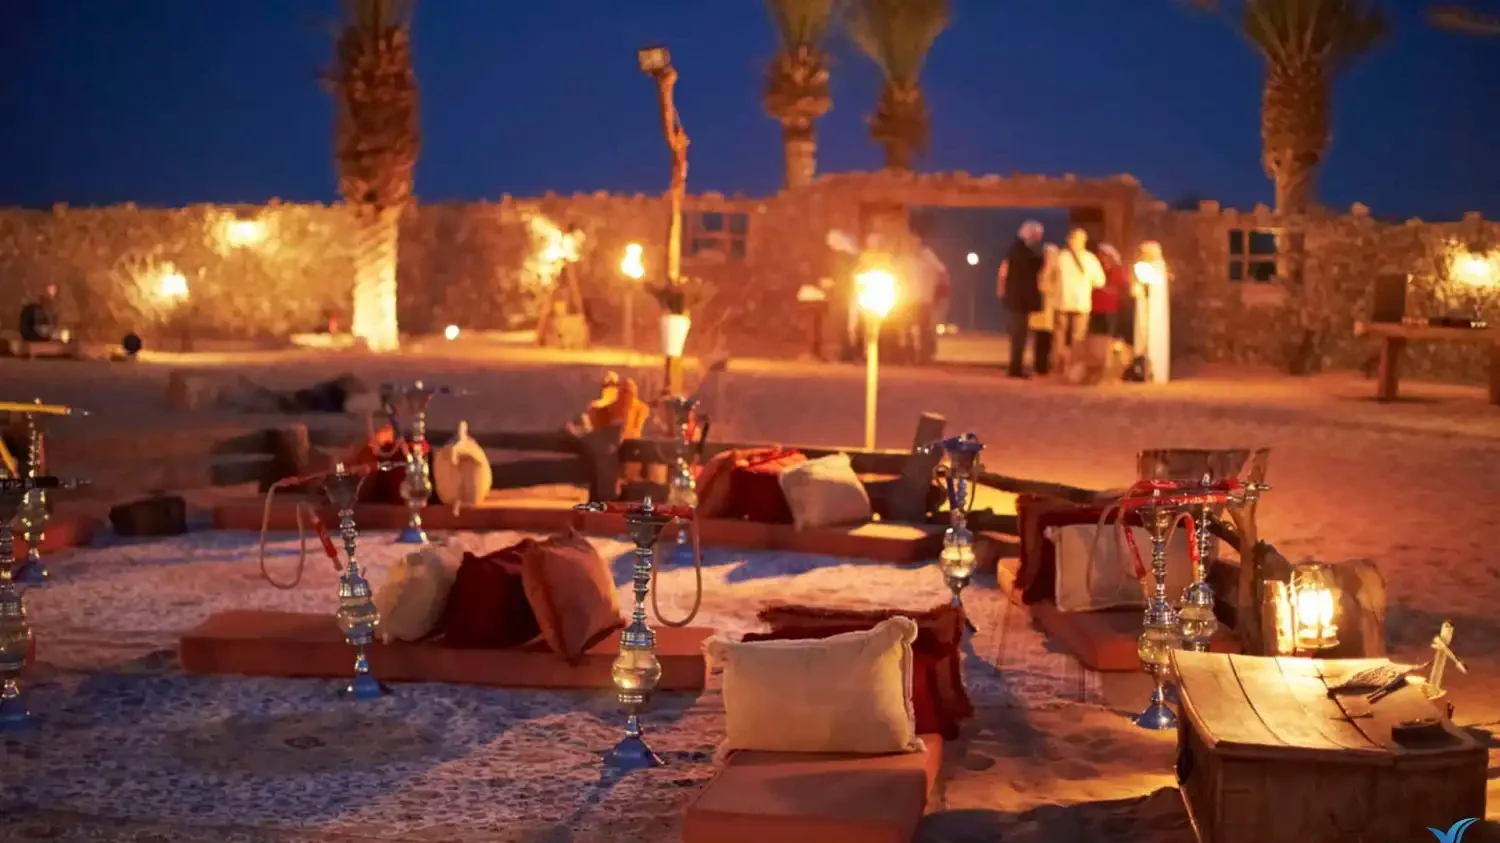 The Nightlife Of The Desert: Exploring The Arabian Nights